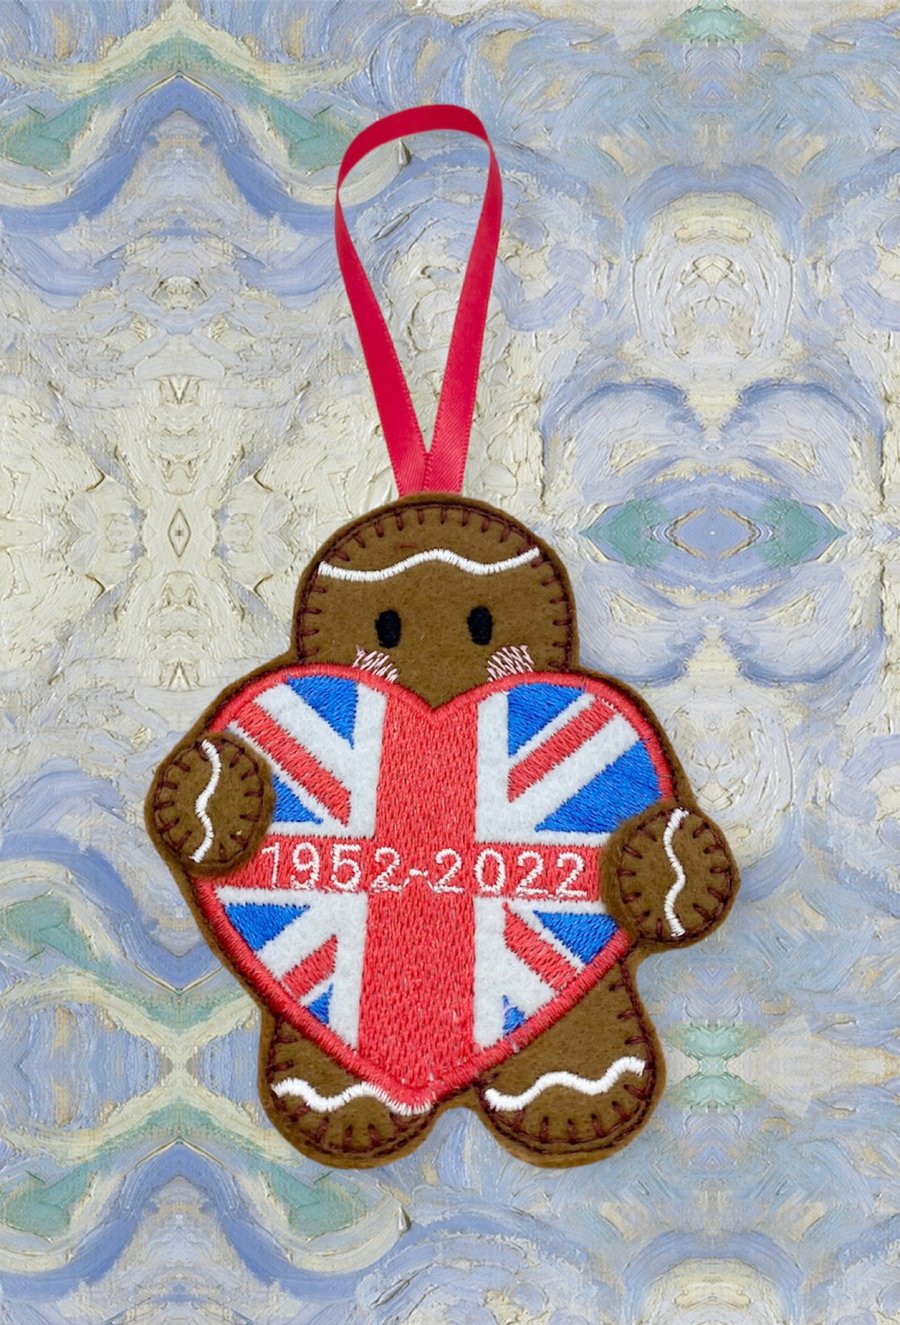 Union Jack Platinum Jubilee Heart Gingerbread Man Queen Jubilee Decoration